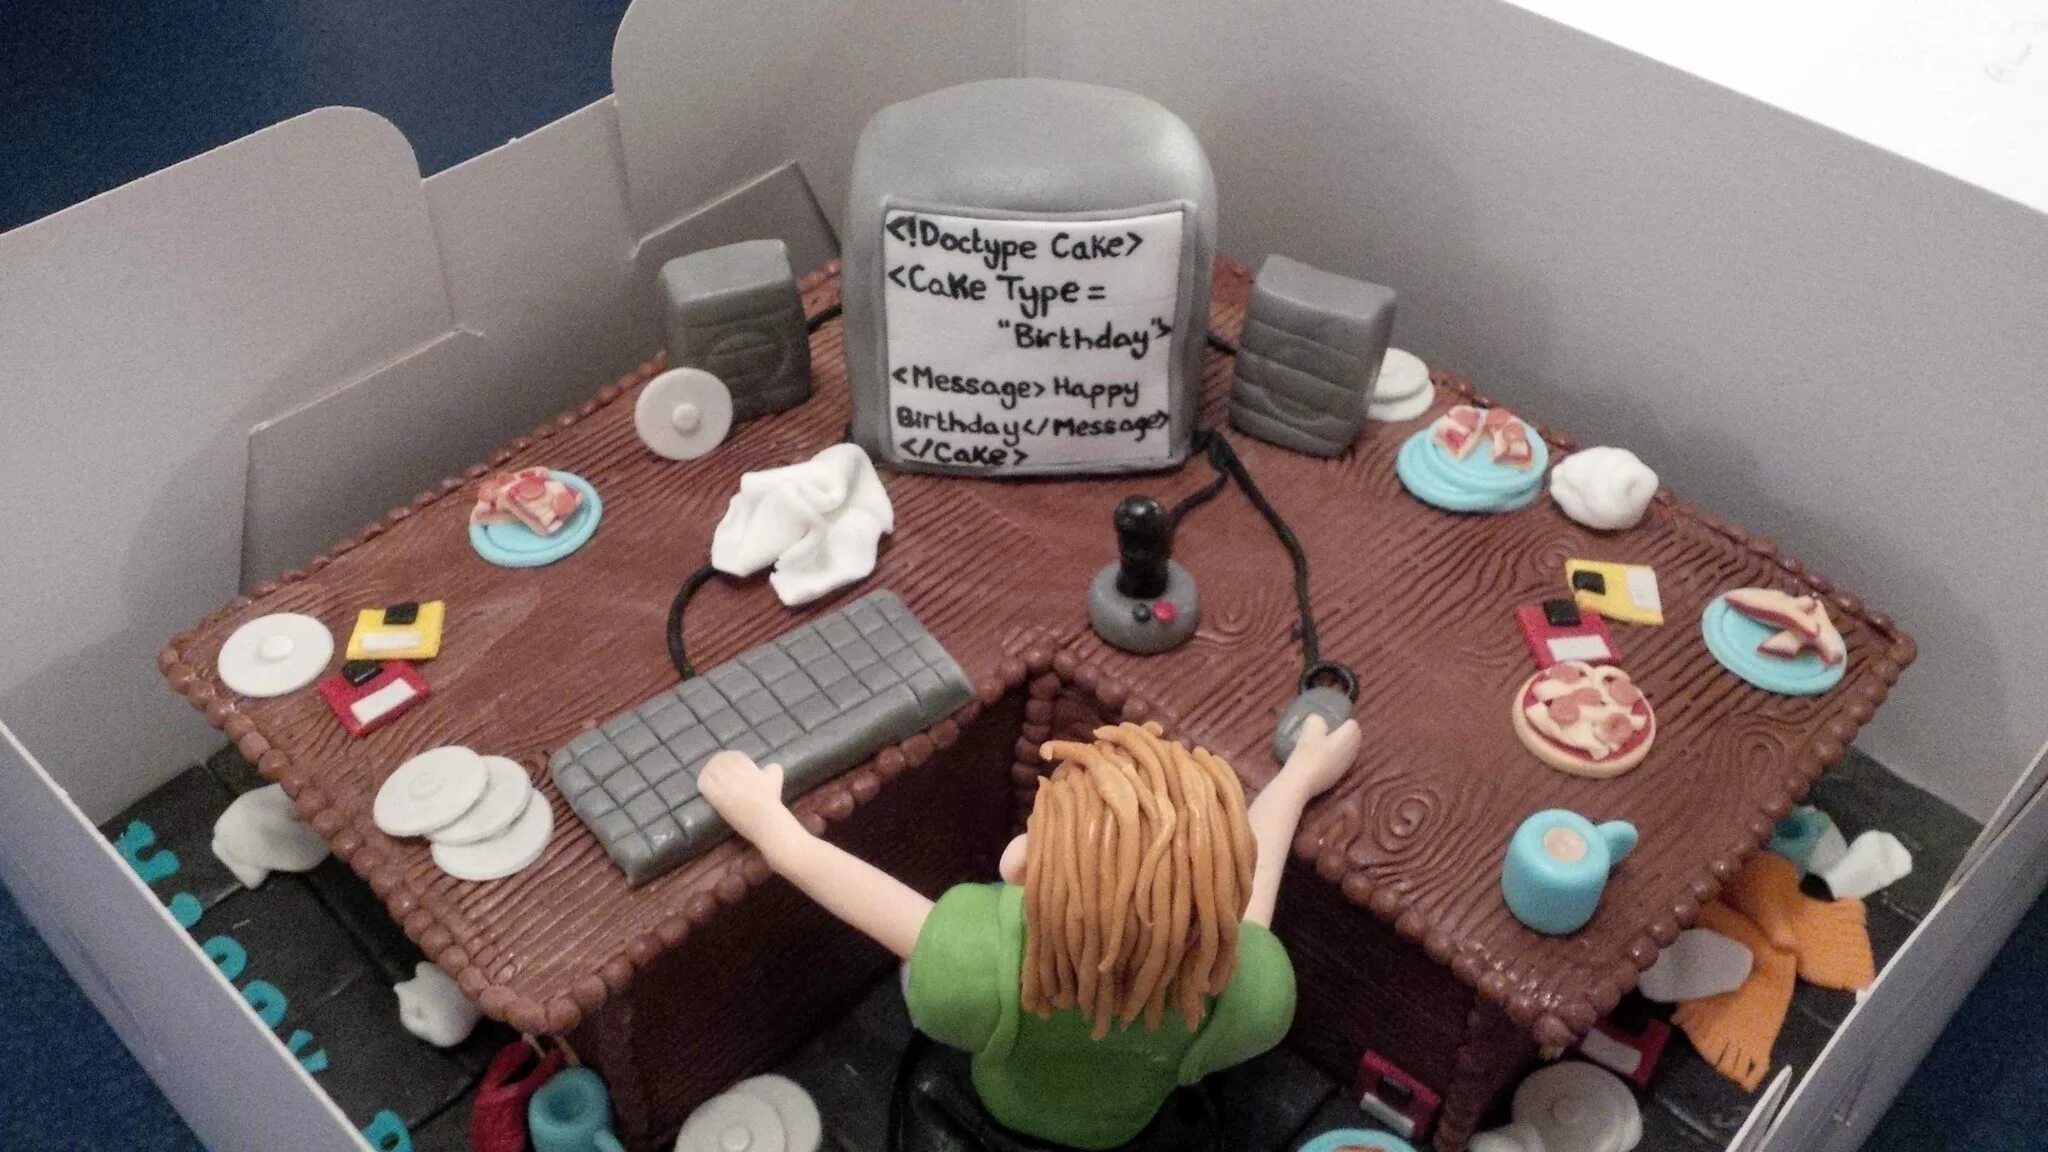 This is my cake. Торт для программиста. Торт в стиле программиста. Торт для программиста на день рождения. Торт айтишнику.